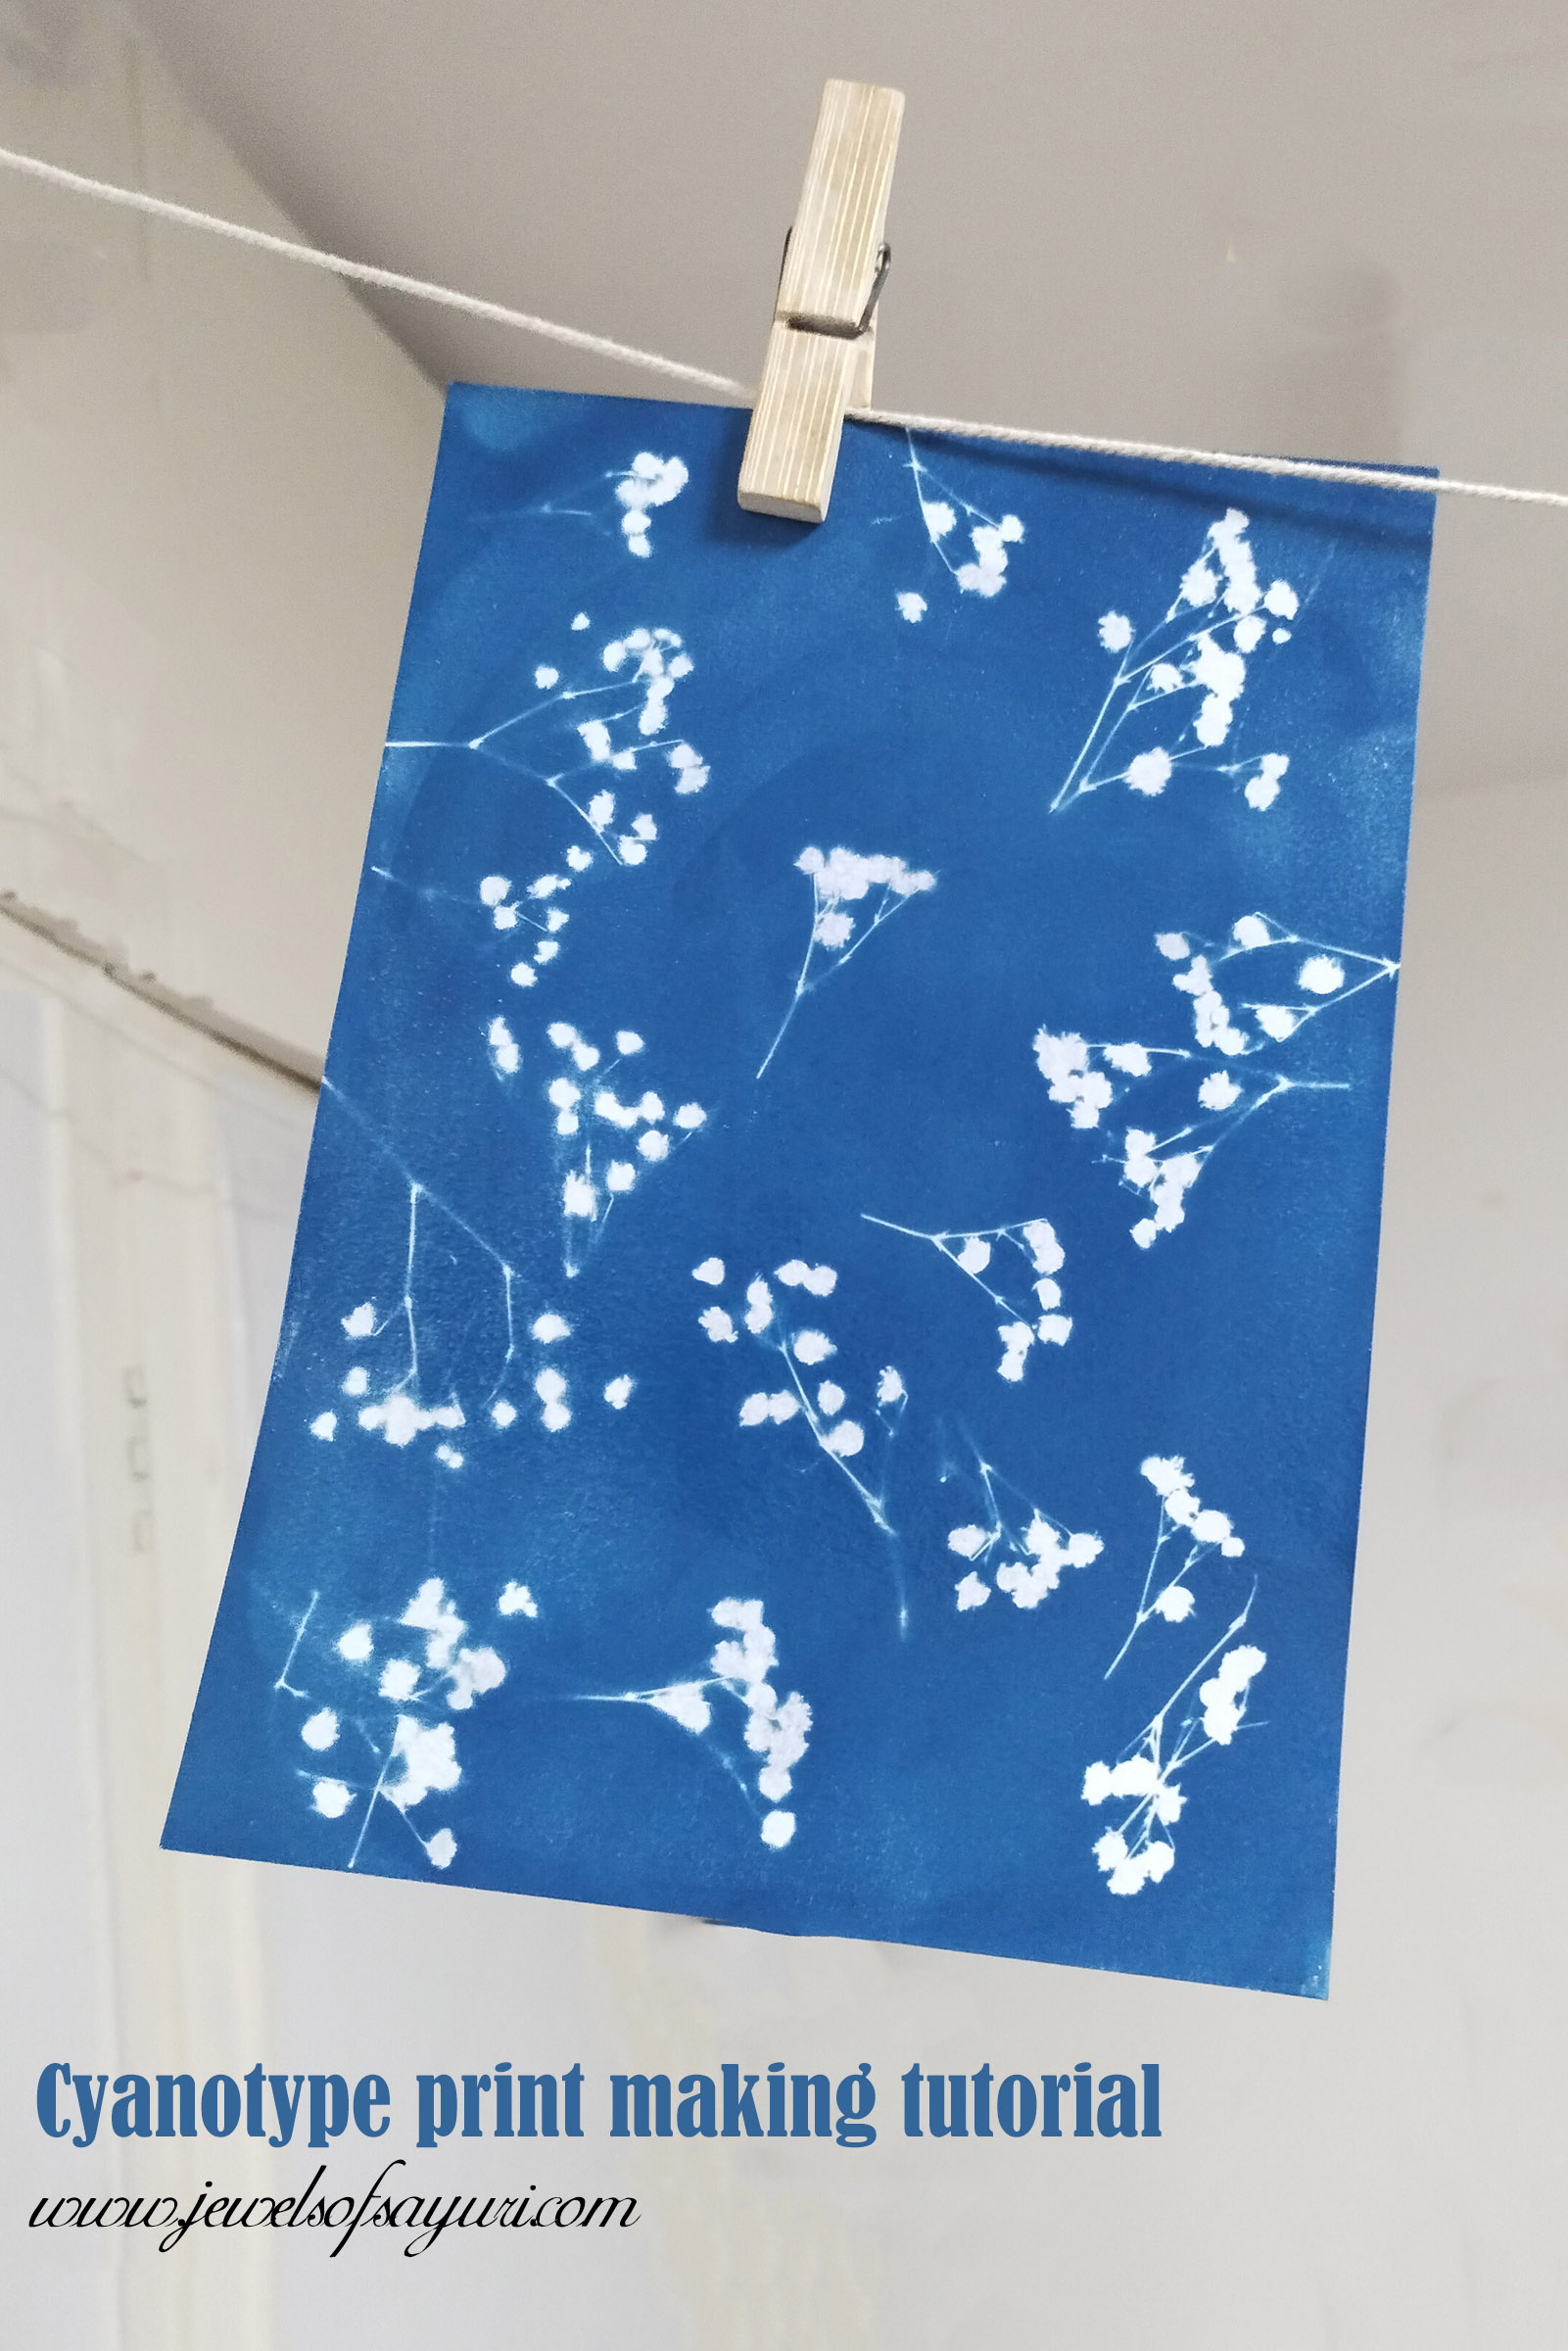 Cyanotype print making tutorial